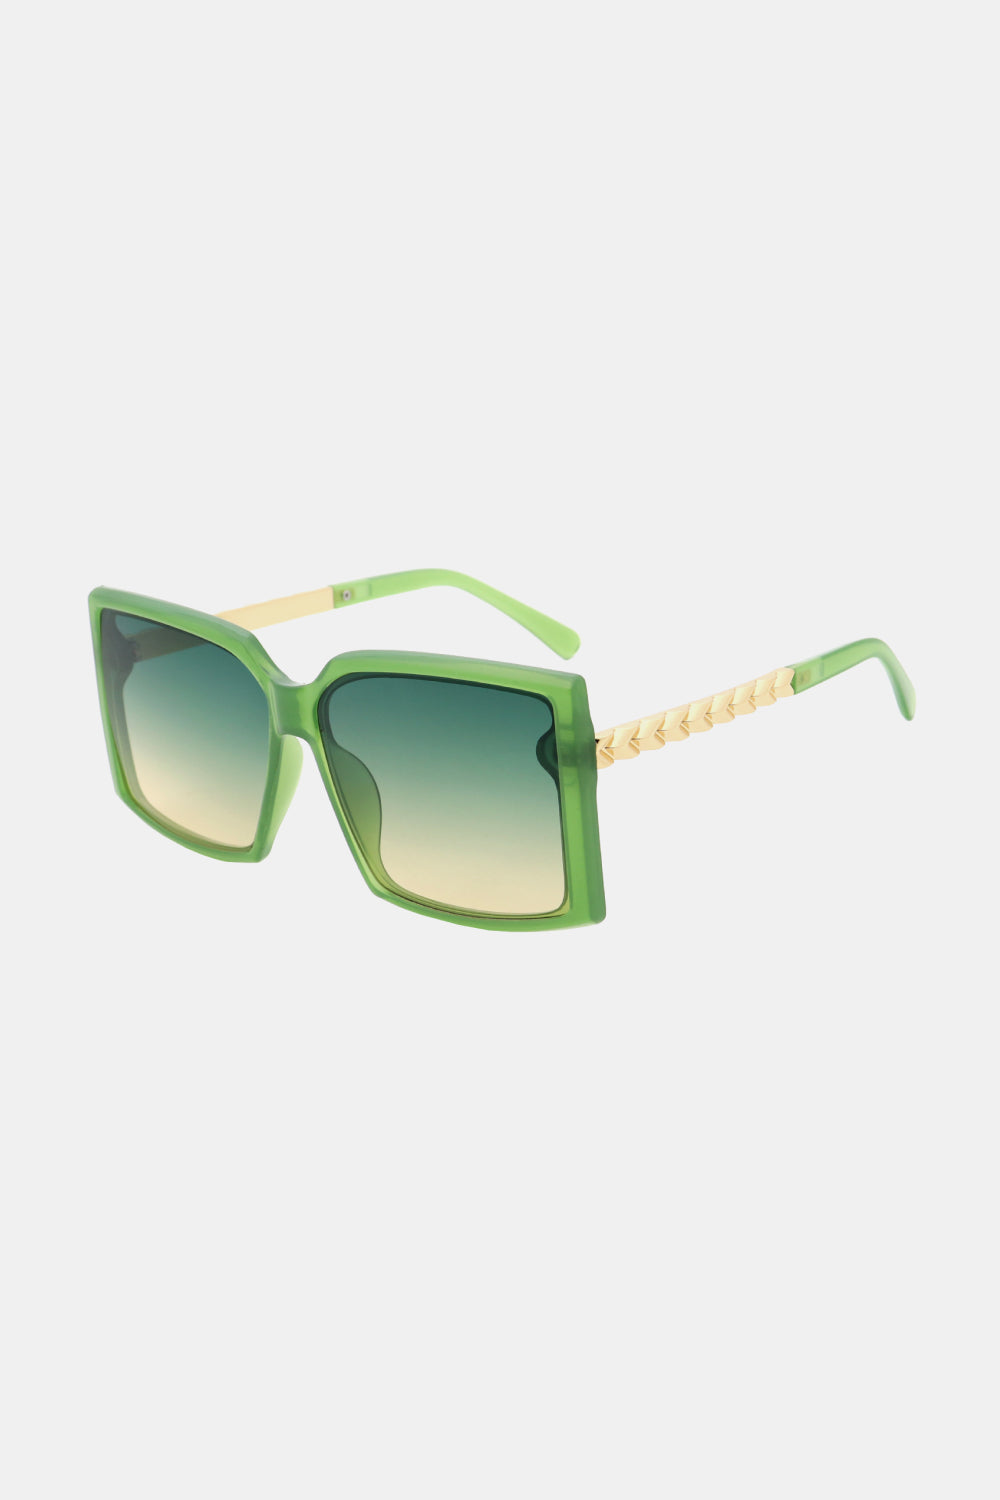 HANNAH MEA Polycarbonate Frame Square Sunglasses